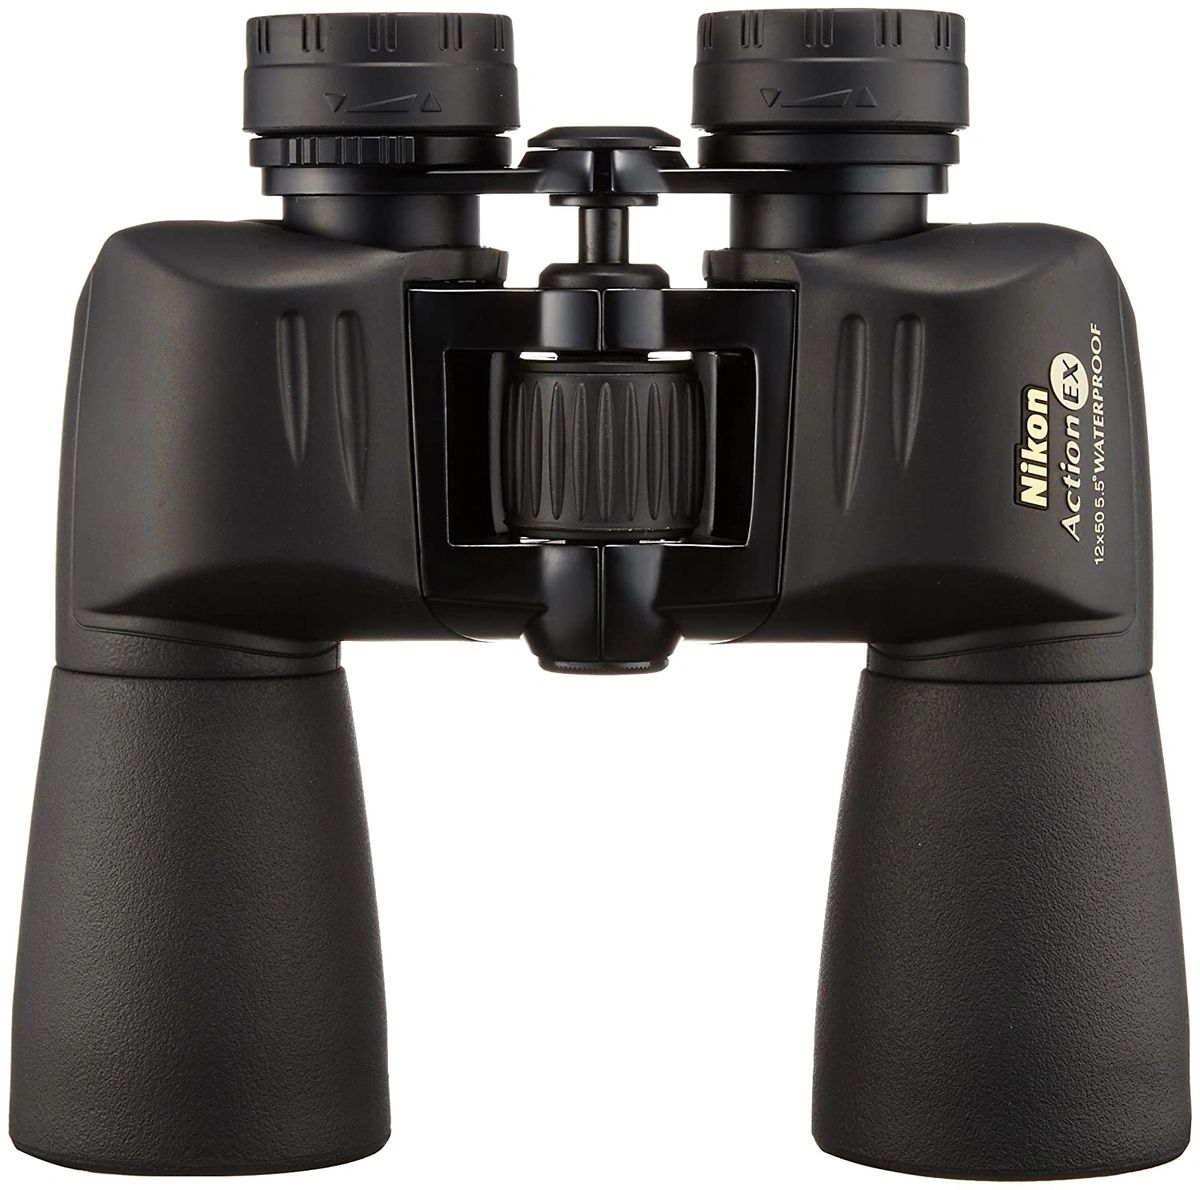 Nikon Action EX 12x50 Water proof nitrogen filled Binoculars bak-4 FMC for  birding, wildlife ,astronomy,